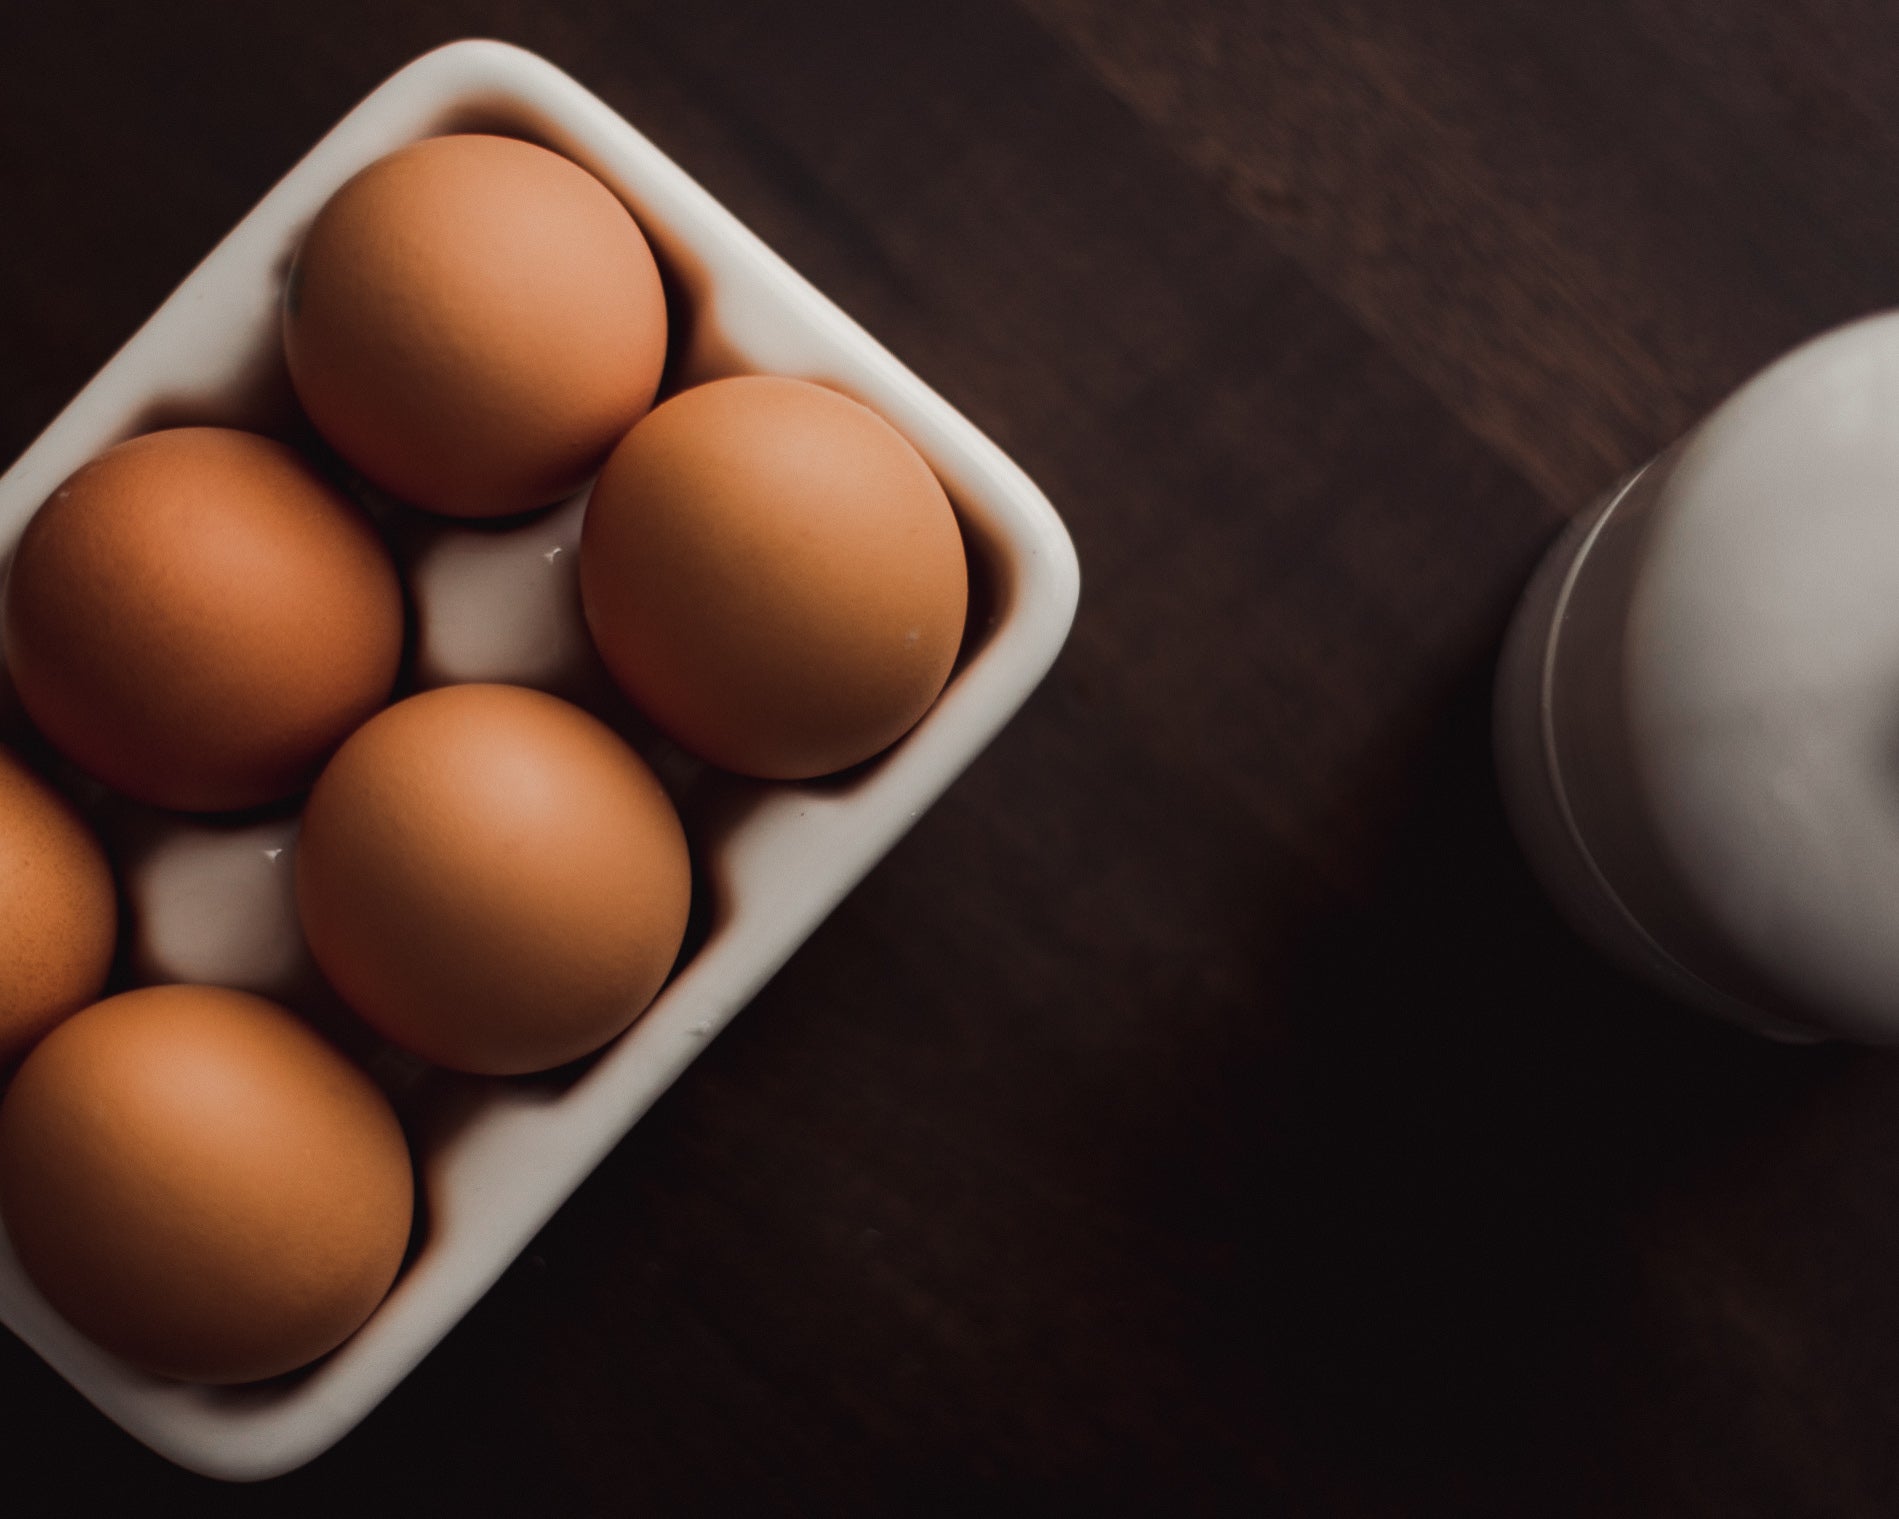 This ceramic half dozen egg holder makes cooking eggs instagram worthy and fun. 